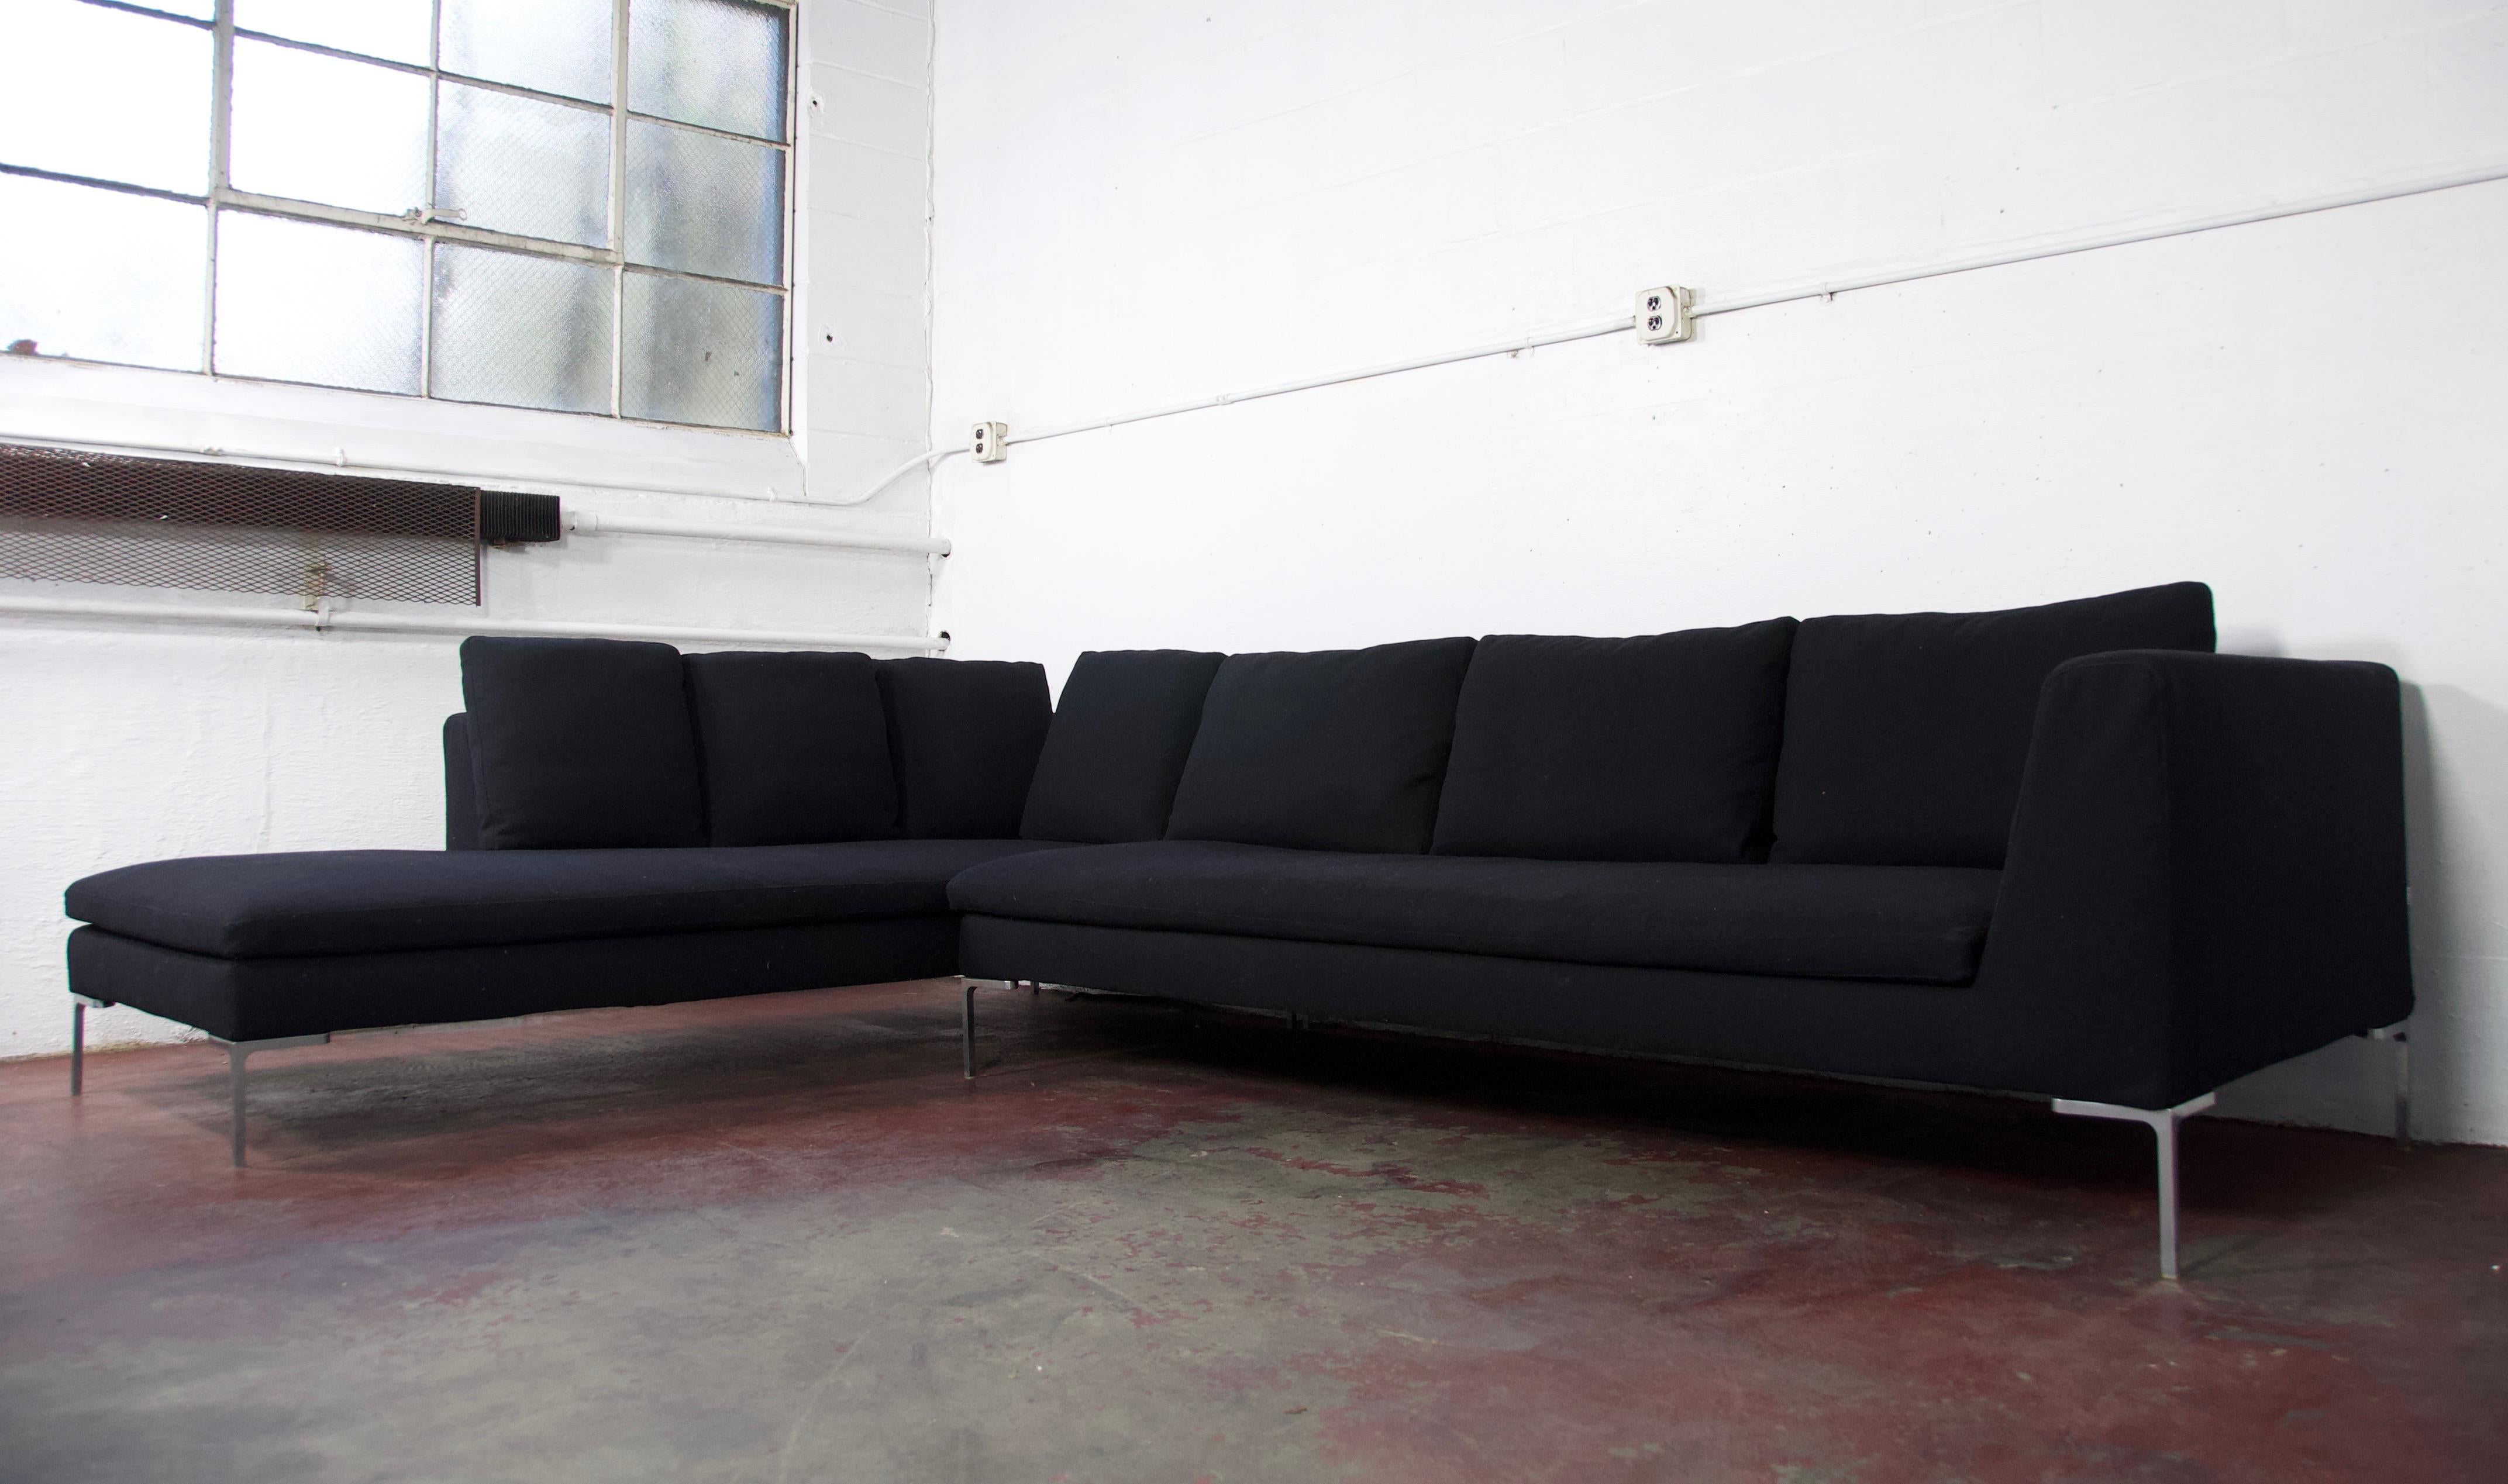 b&b italia charles sofa for sale